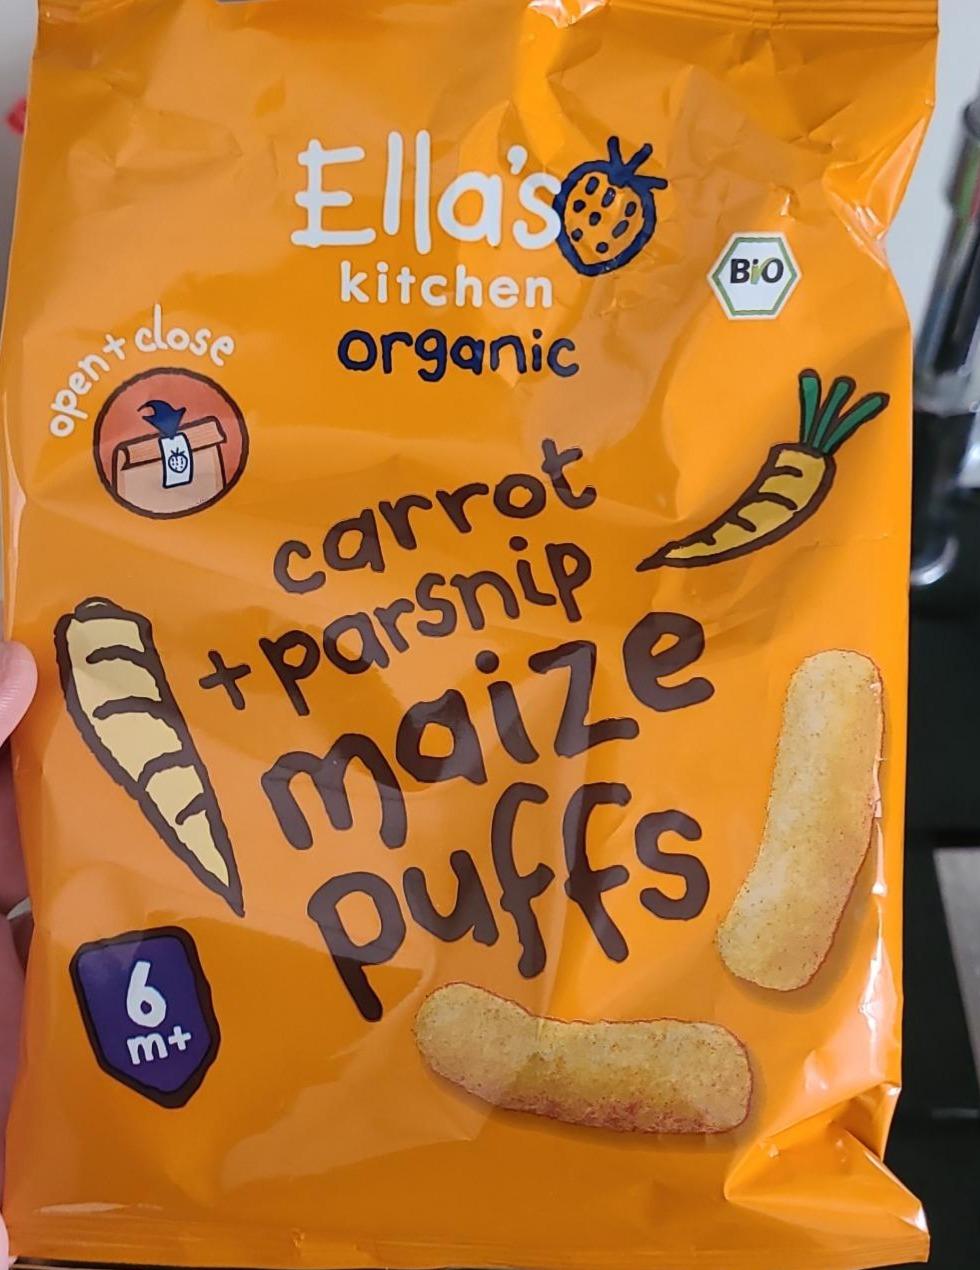 Fotografie - Bio Maize puffs carrot+parsnip Ella's kitchen